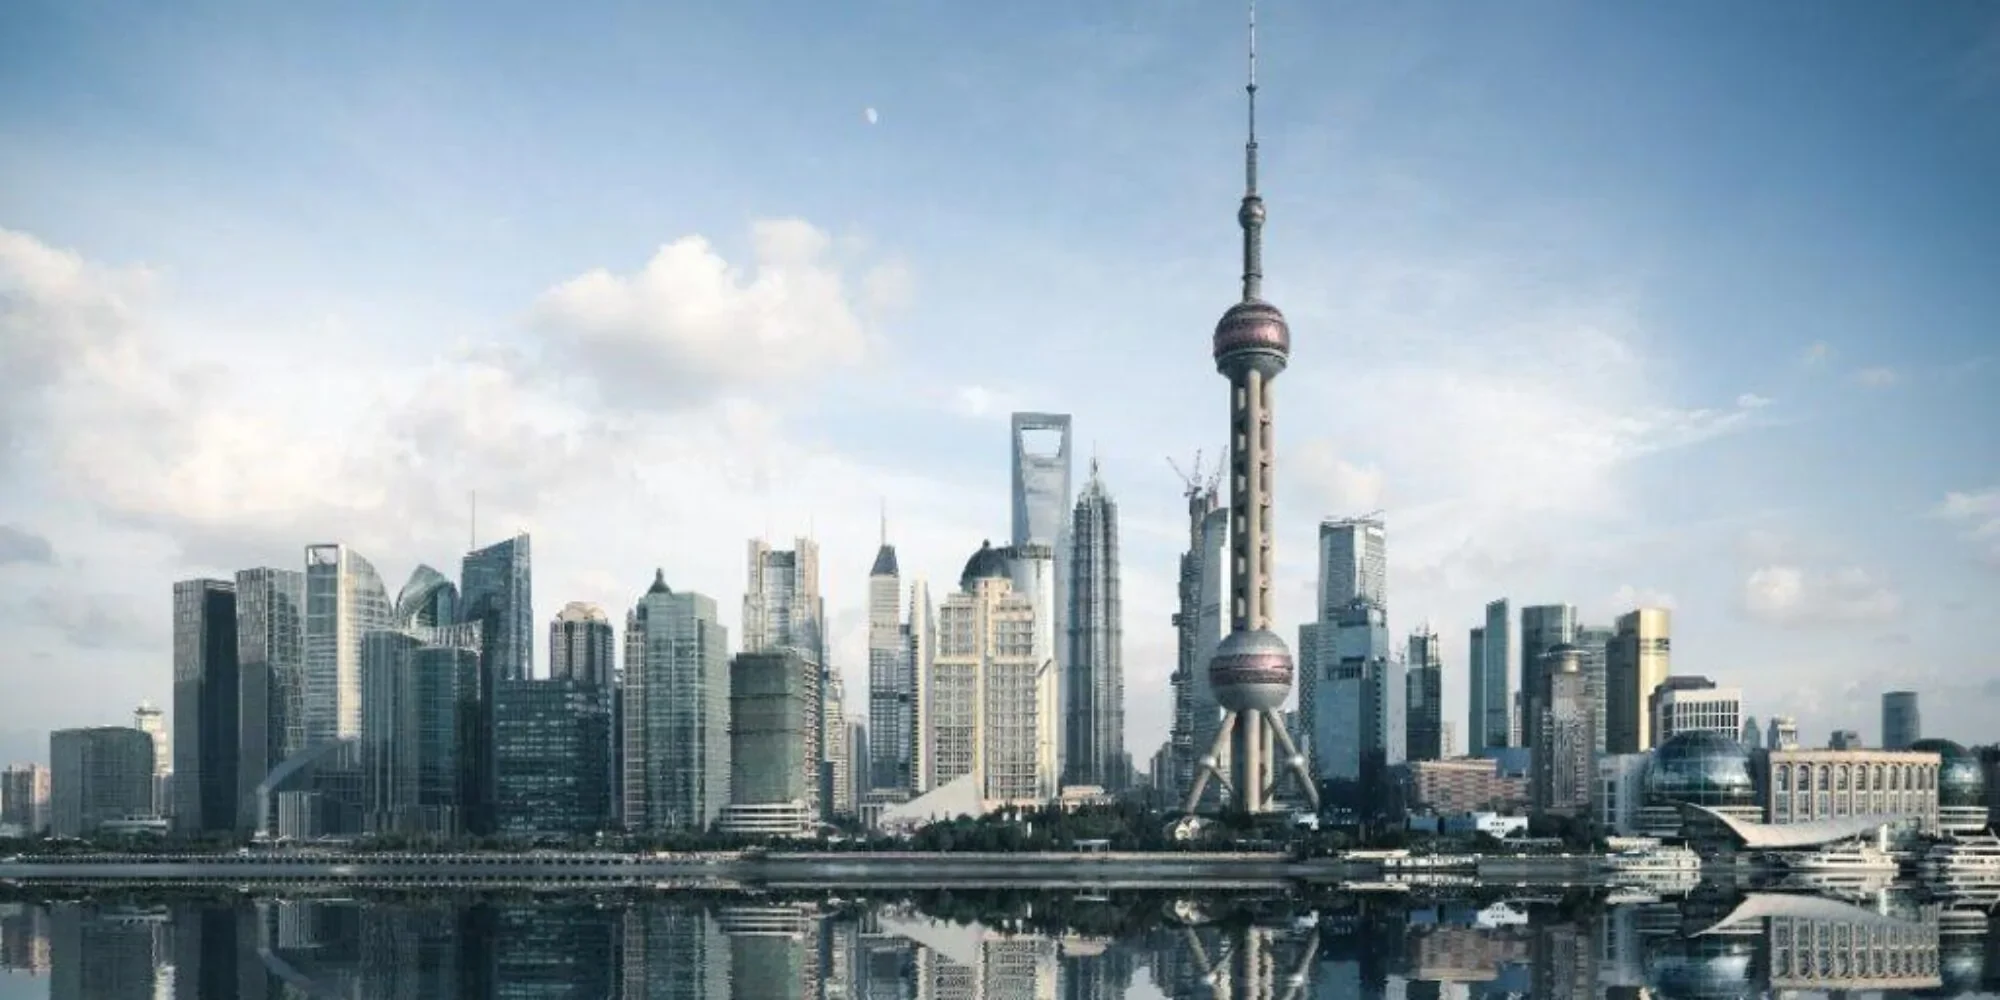 Shanghai-Tower-Unit-OB-3-1024x683-2000x1000